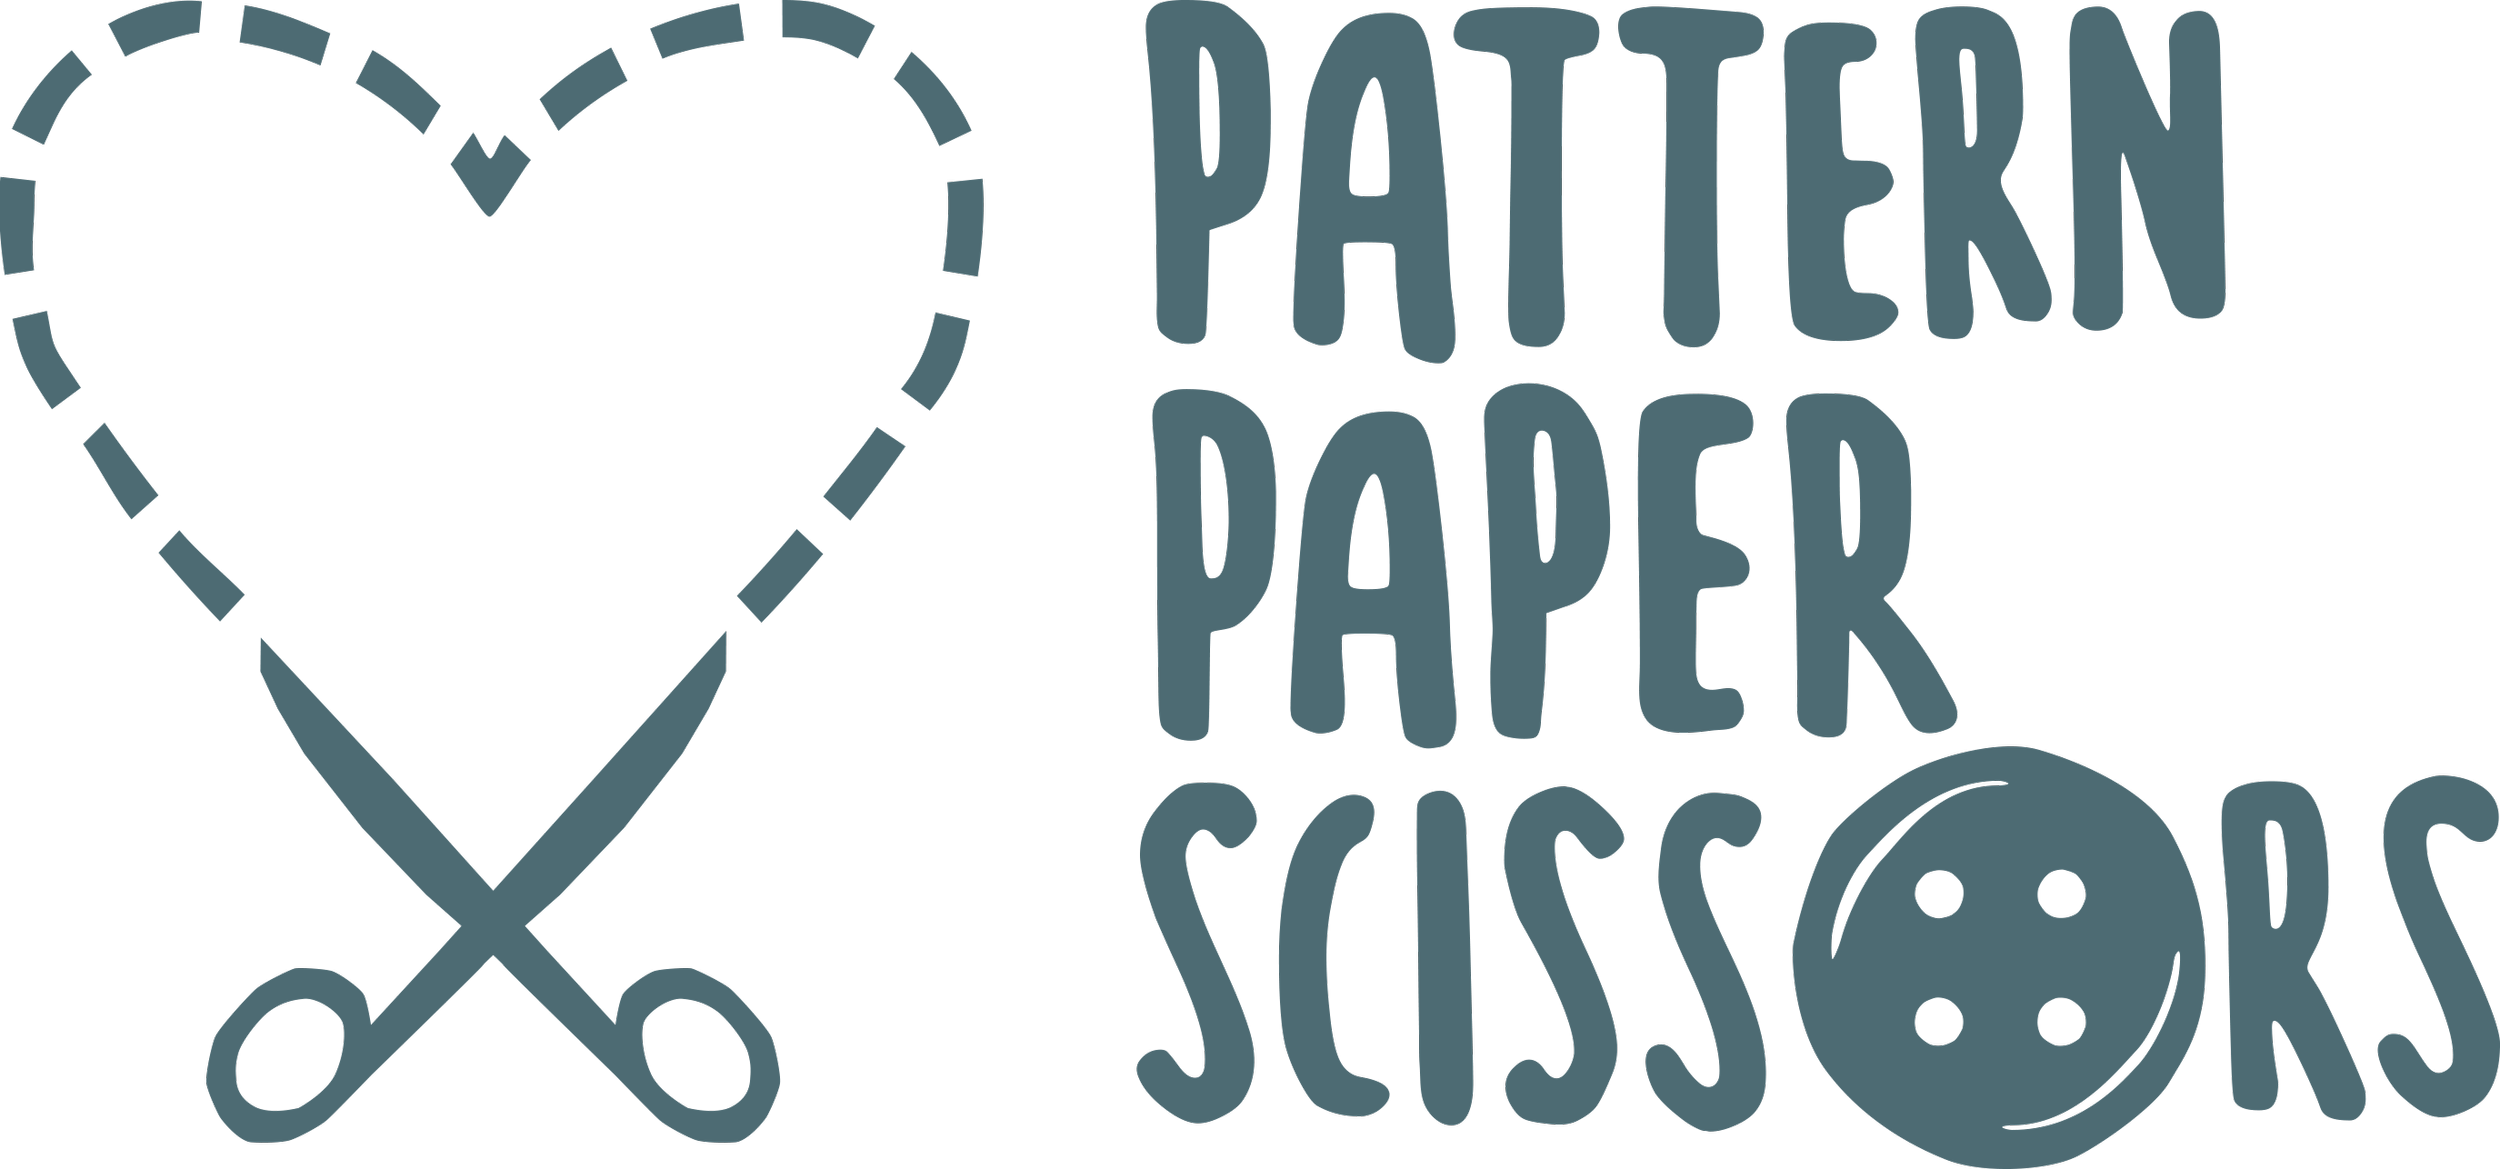 Pattern Paper Scissors